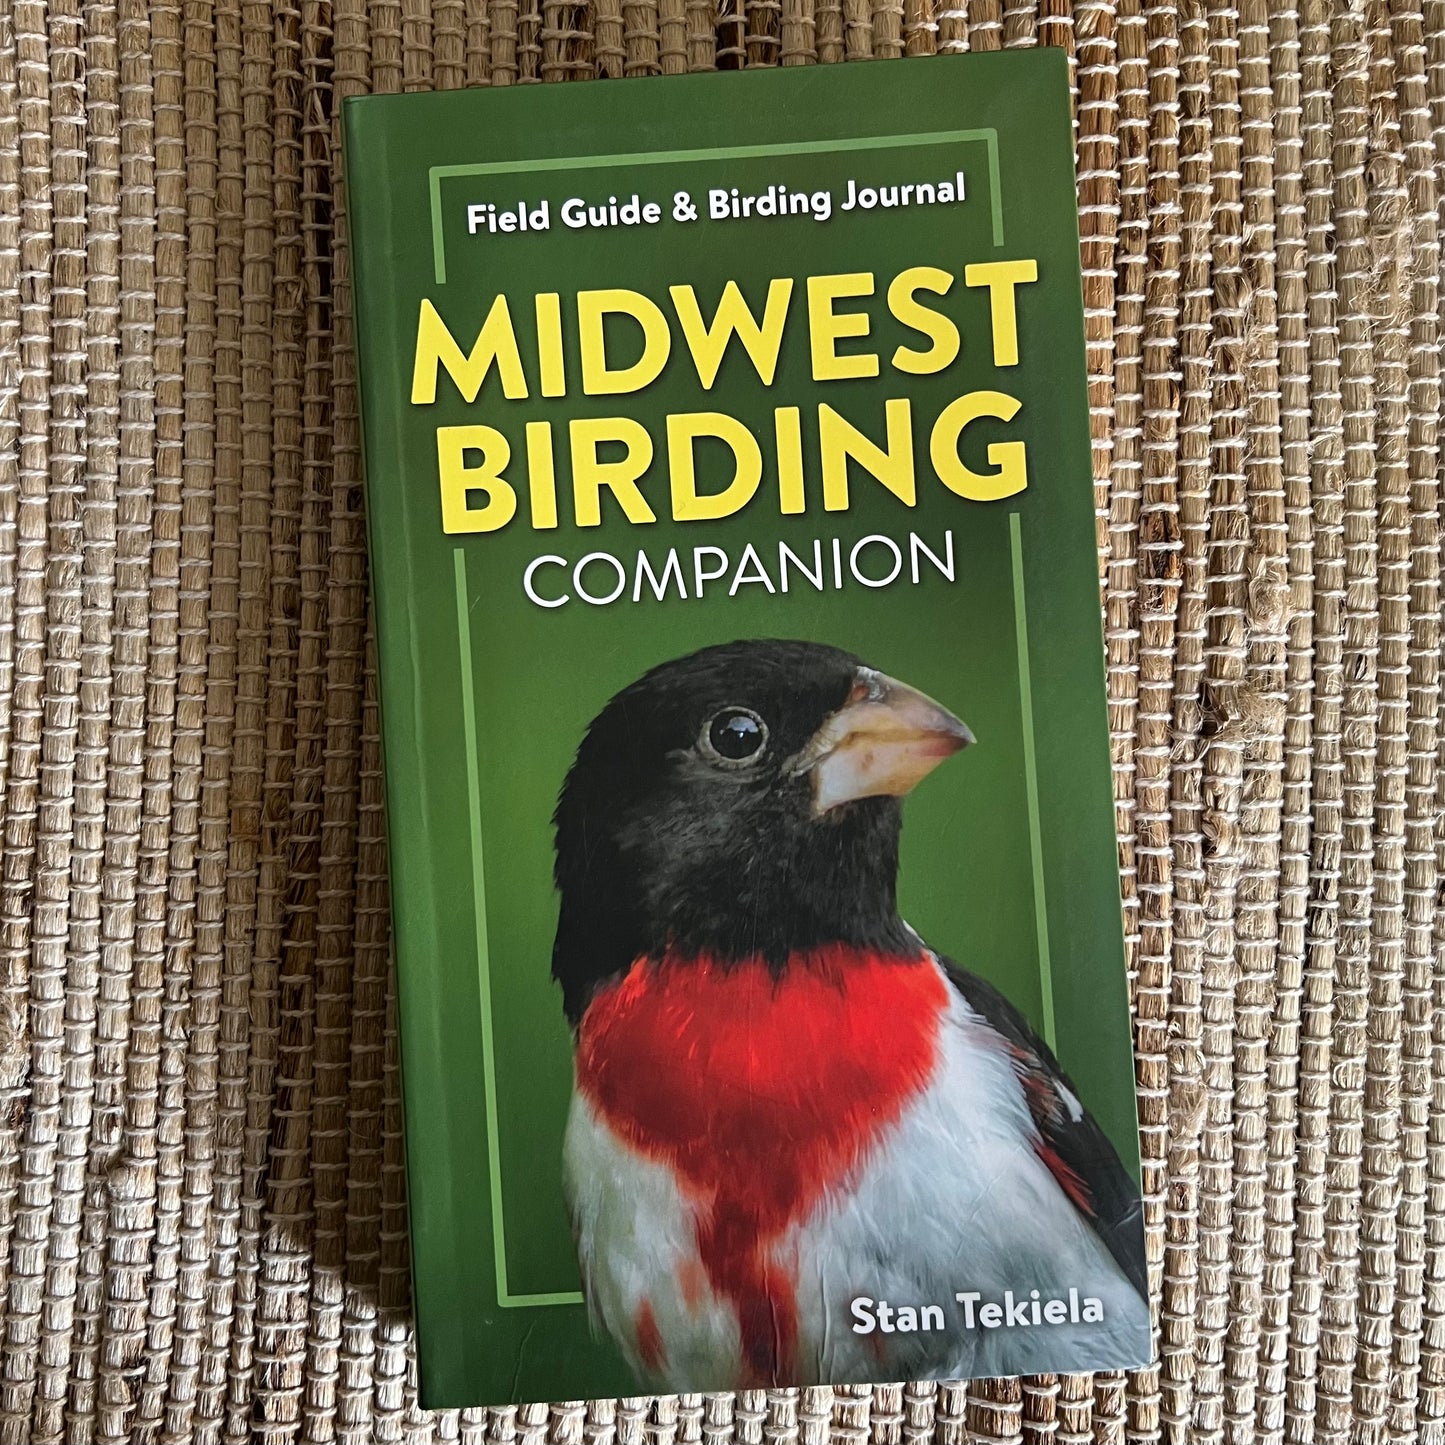 Midwest Birding Companion by Stan Tekiela